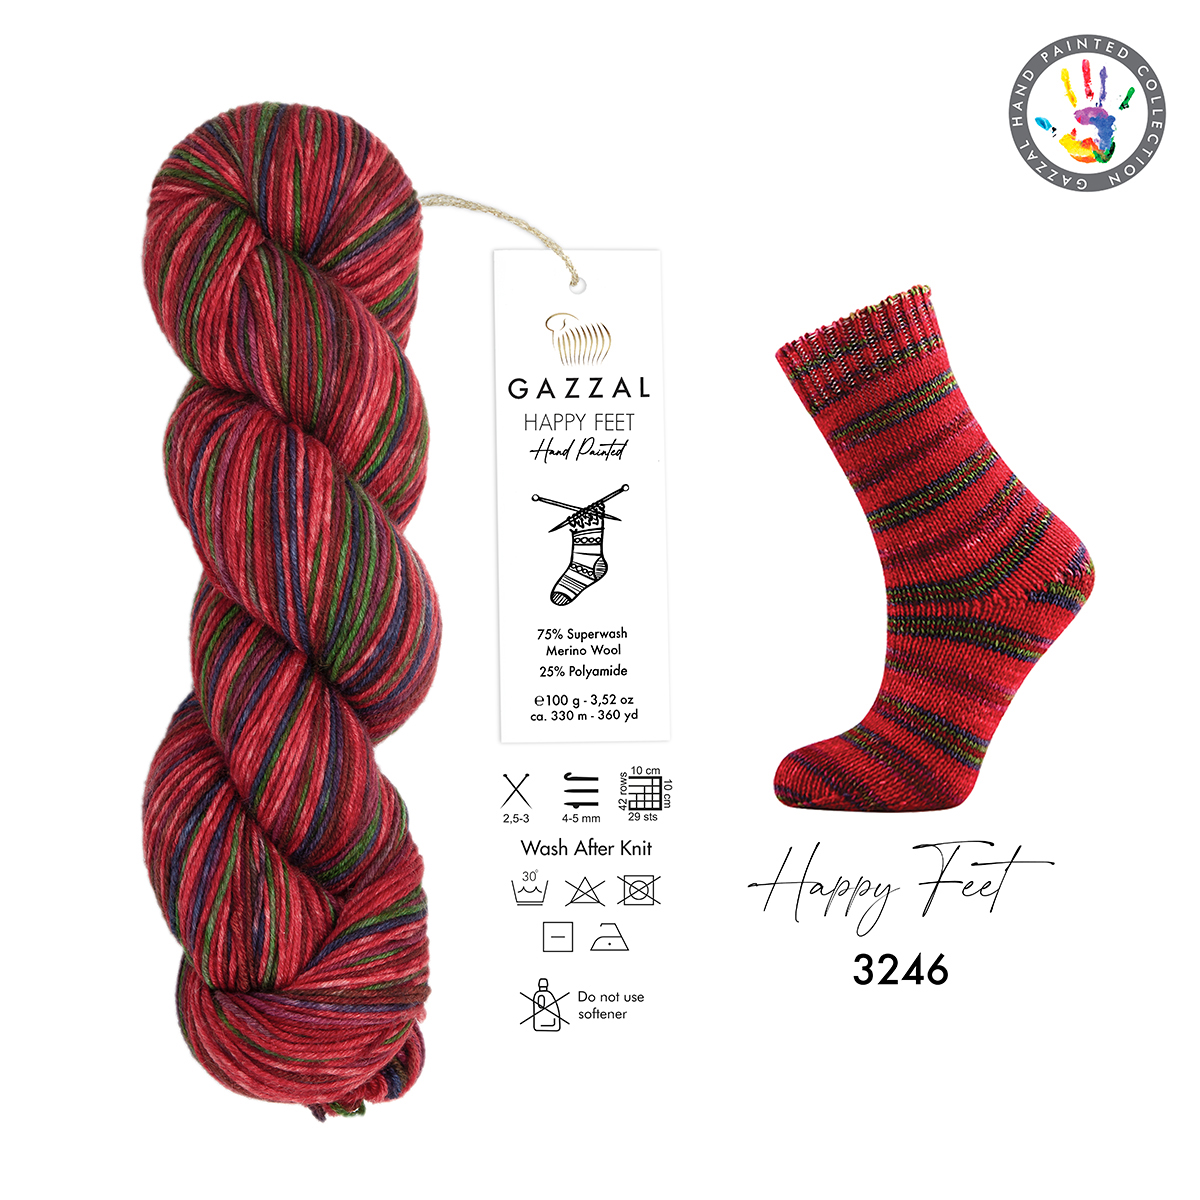 Cuộn len sợi loang nhiều màu bảy sắc cầu vòng Gazzal Happy Feet Yarn Wool Merino